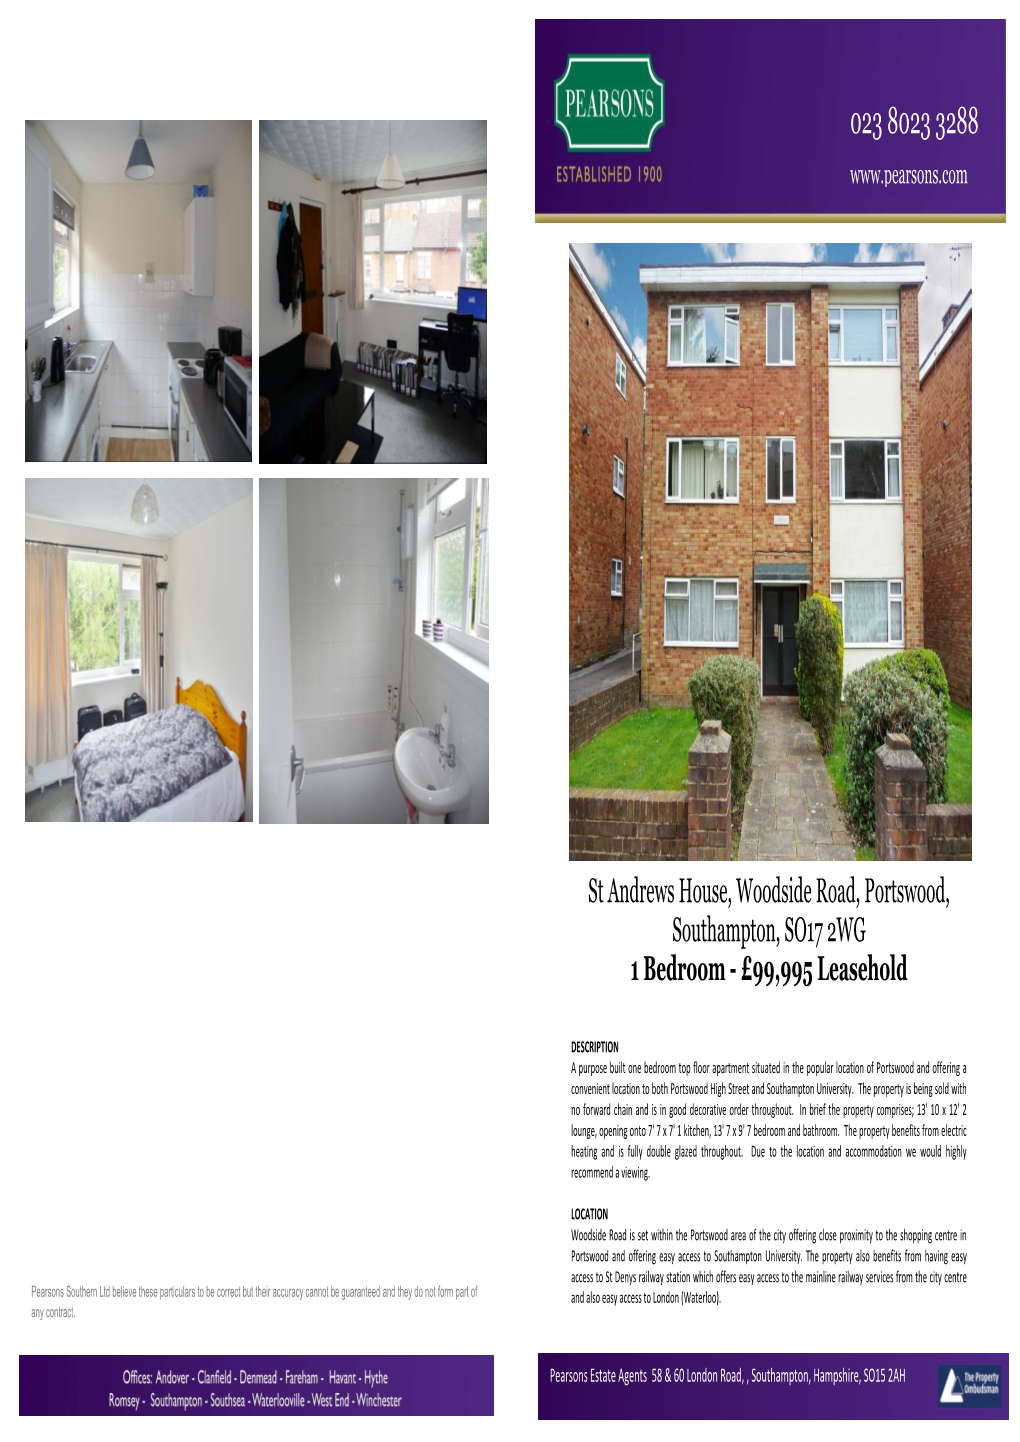 St Andrews House, Woodside Road, Portswood, Southampton, SO17 2WG 1 Bedroom - £99,995 Leasehold